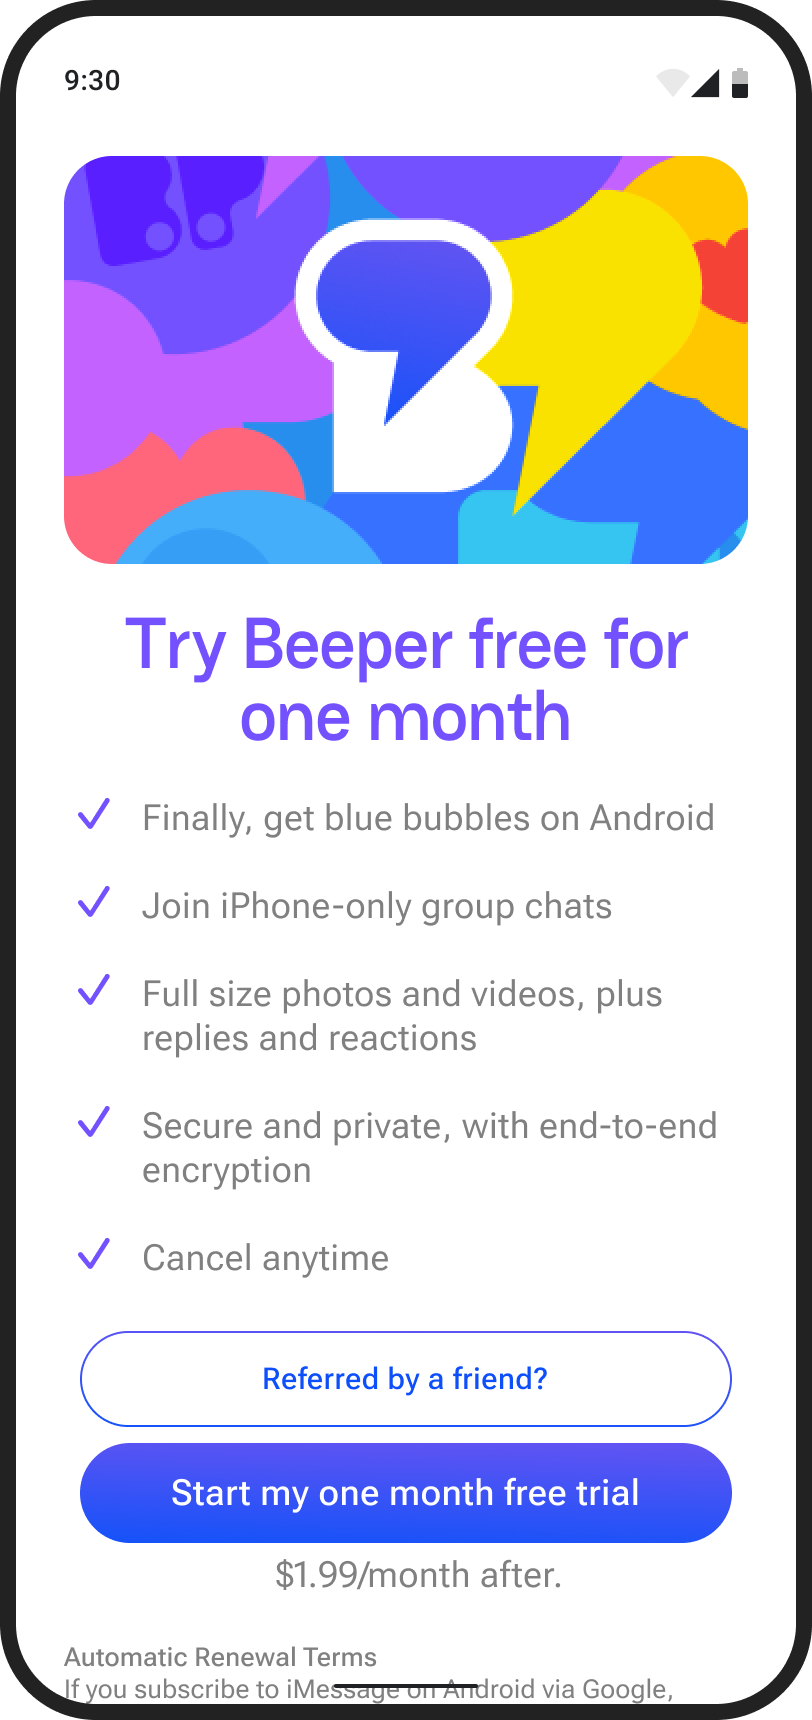 Beeper Mini Returns to Google Play Store